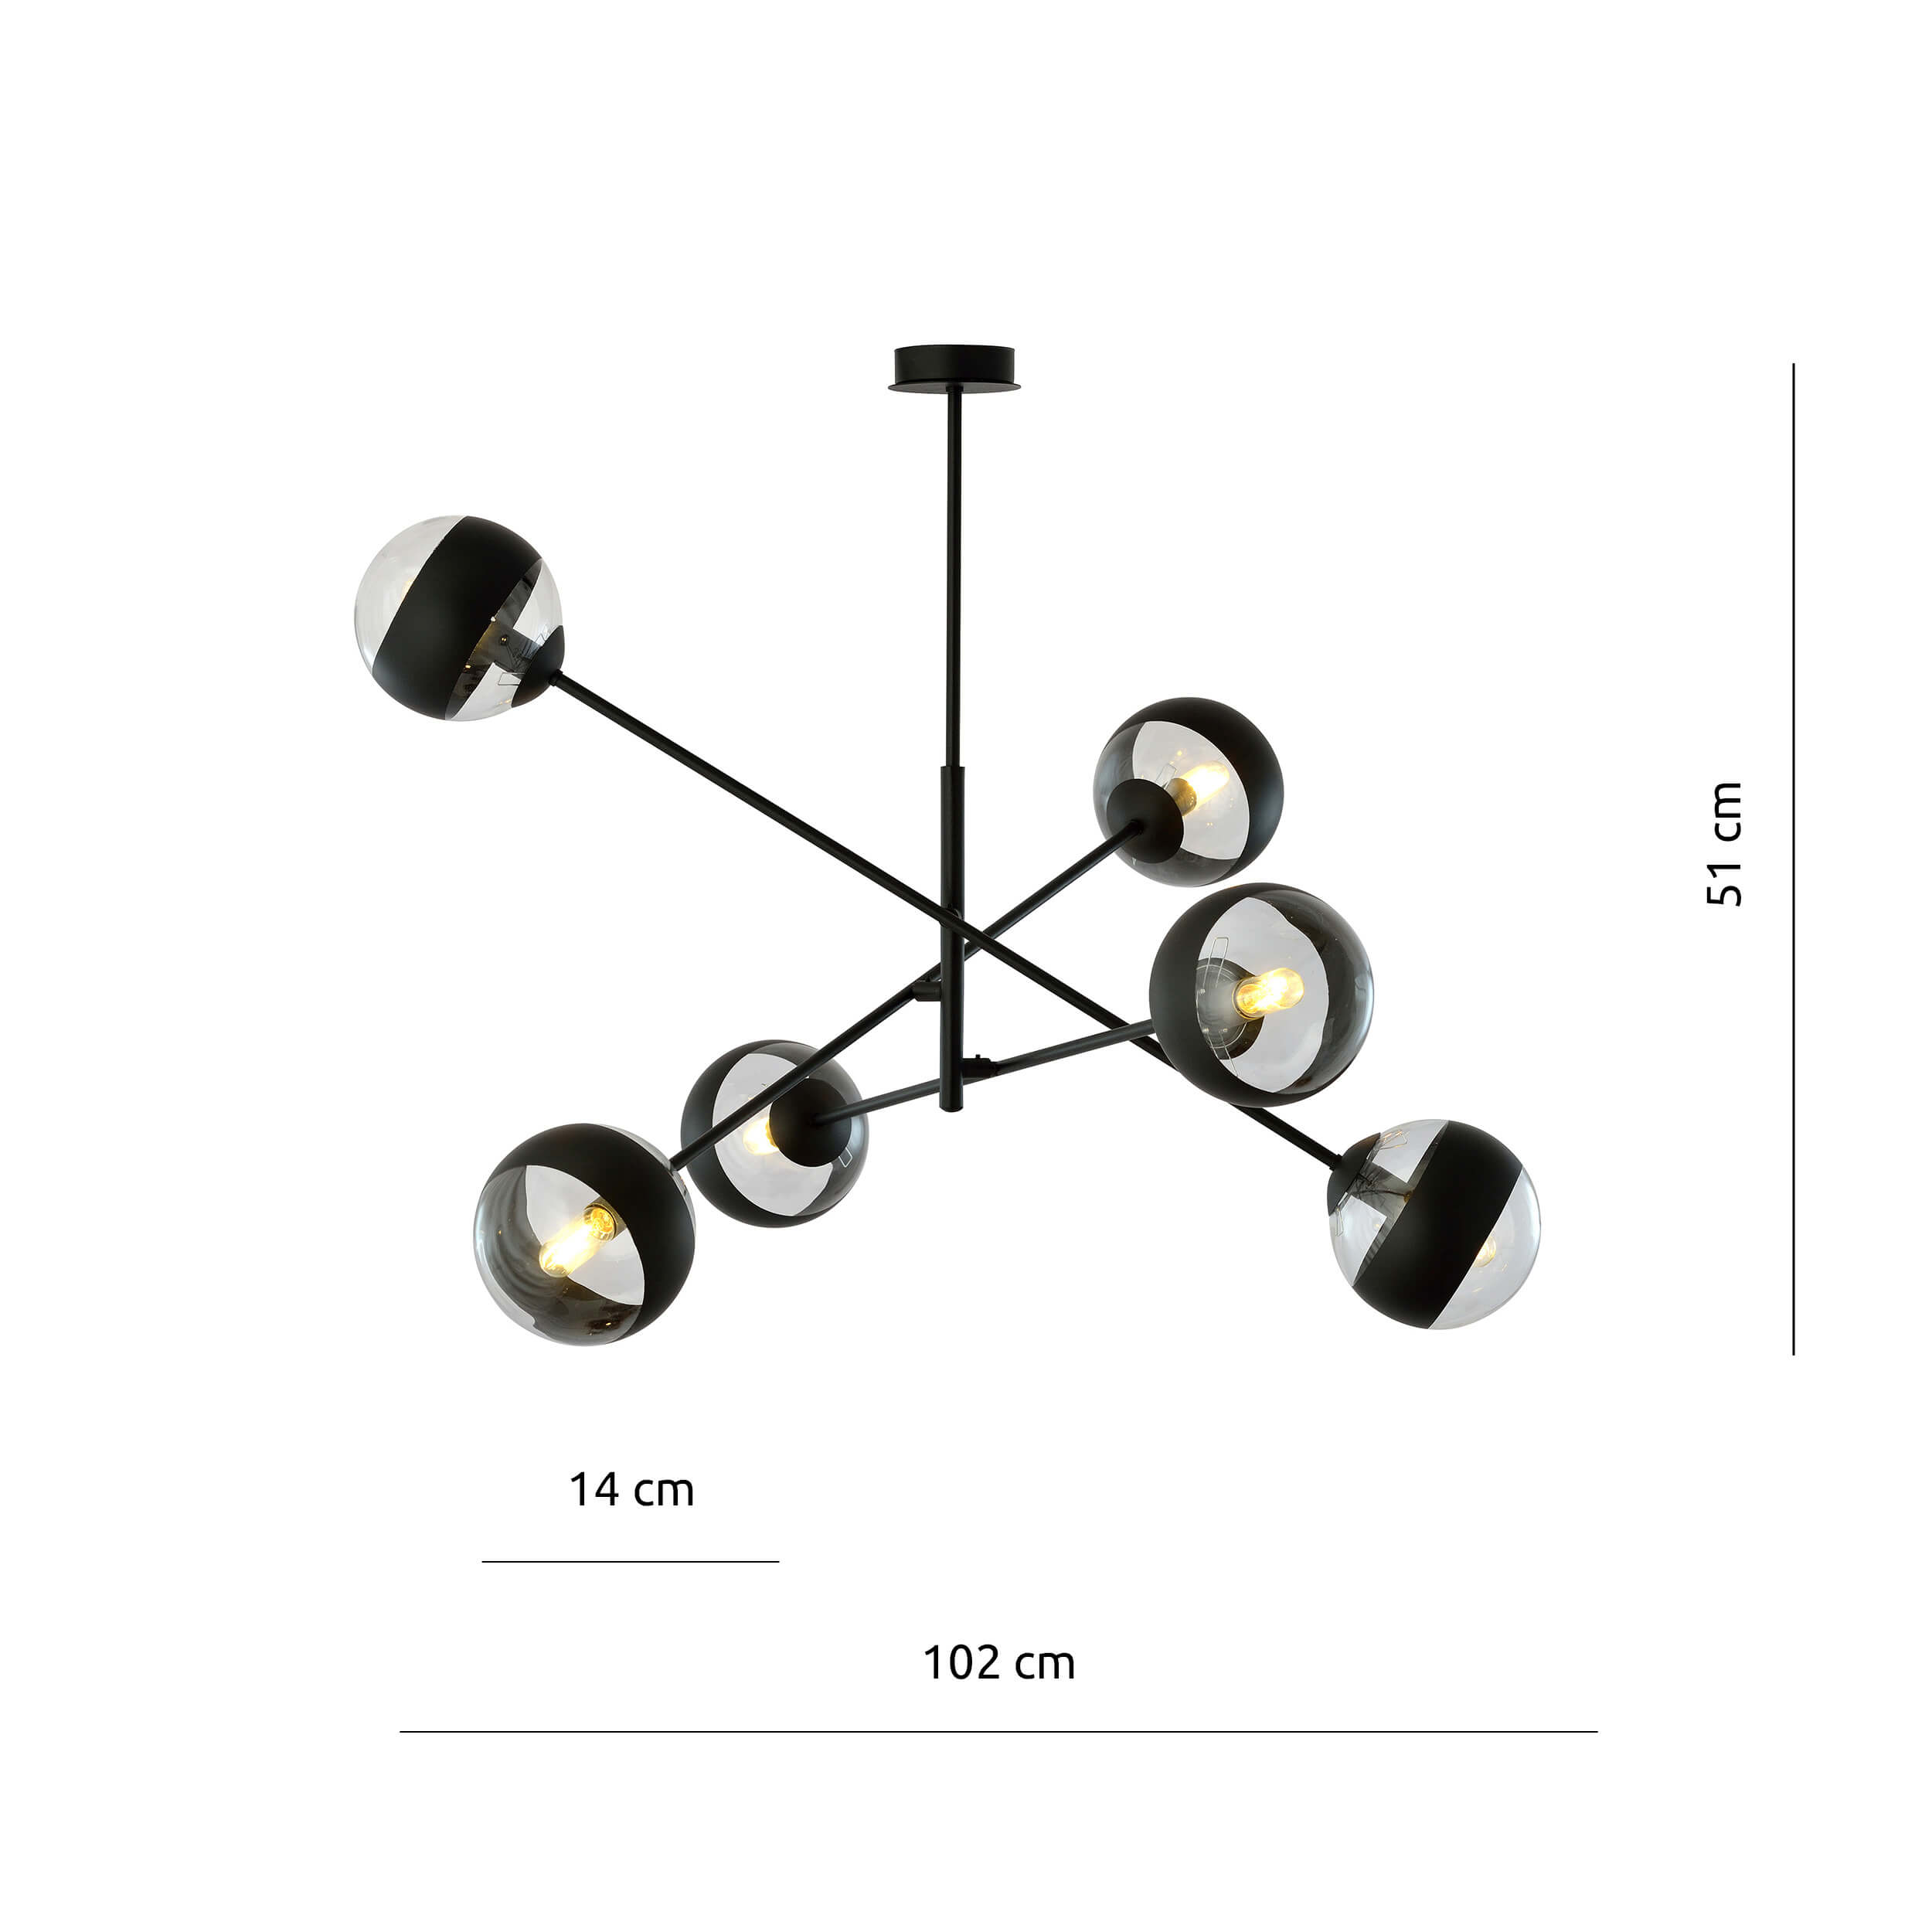 Designerska sufitowa lampa Frix 6 w czarnym kolorze